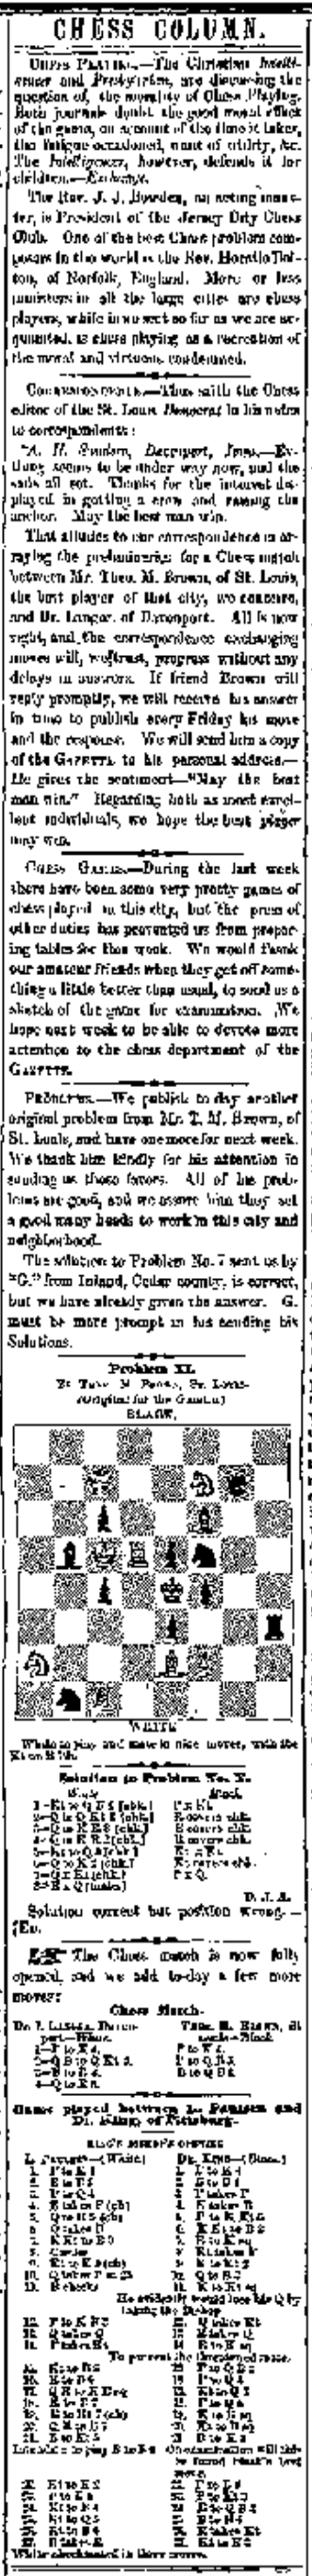 1859.03.25-01 Davenport Daily Gazette.png